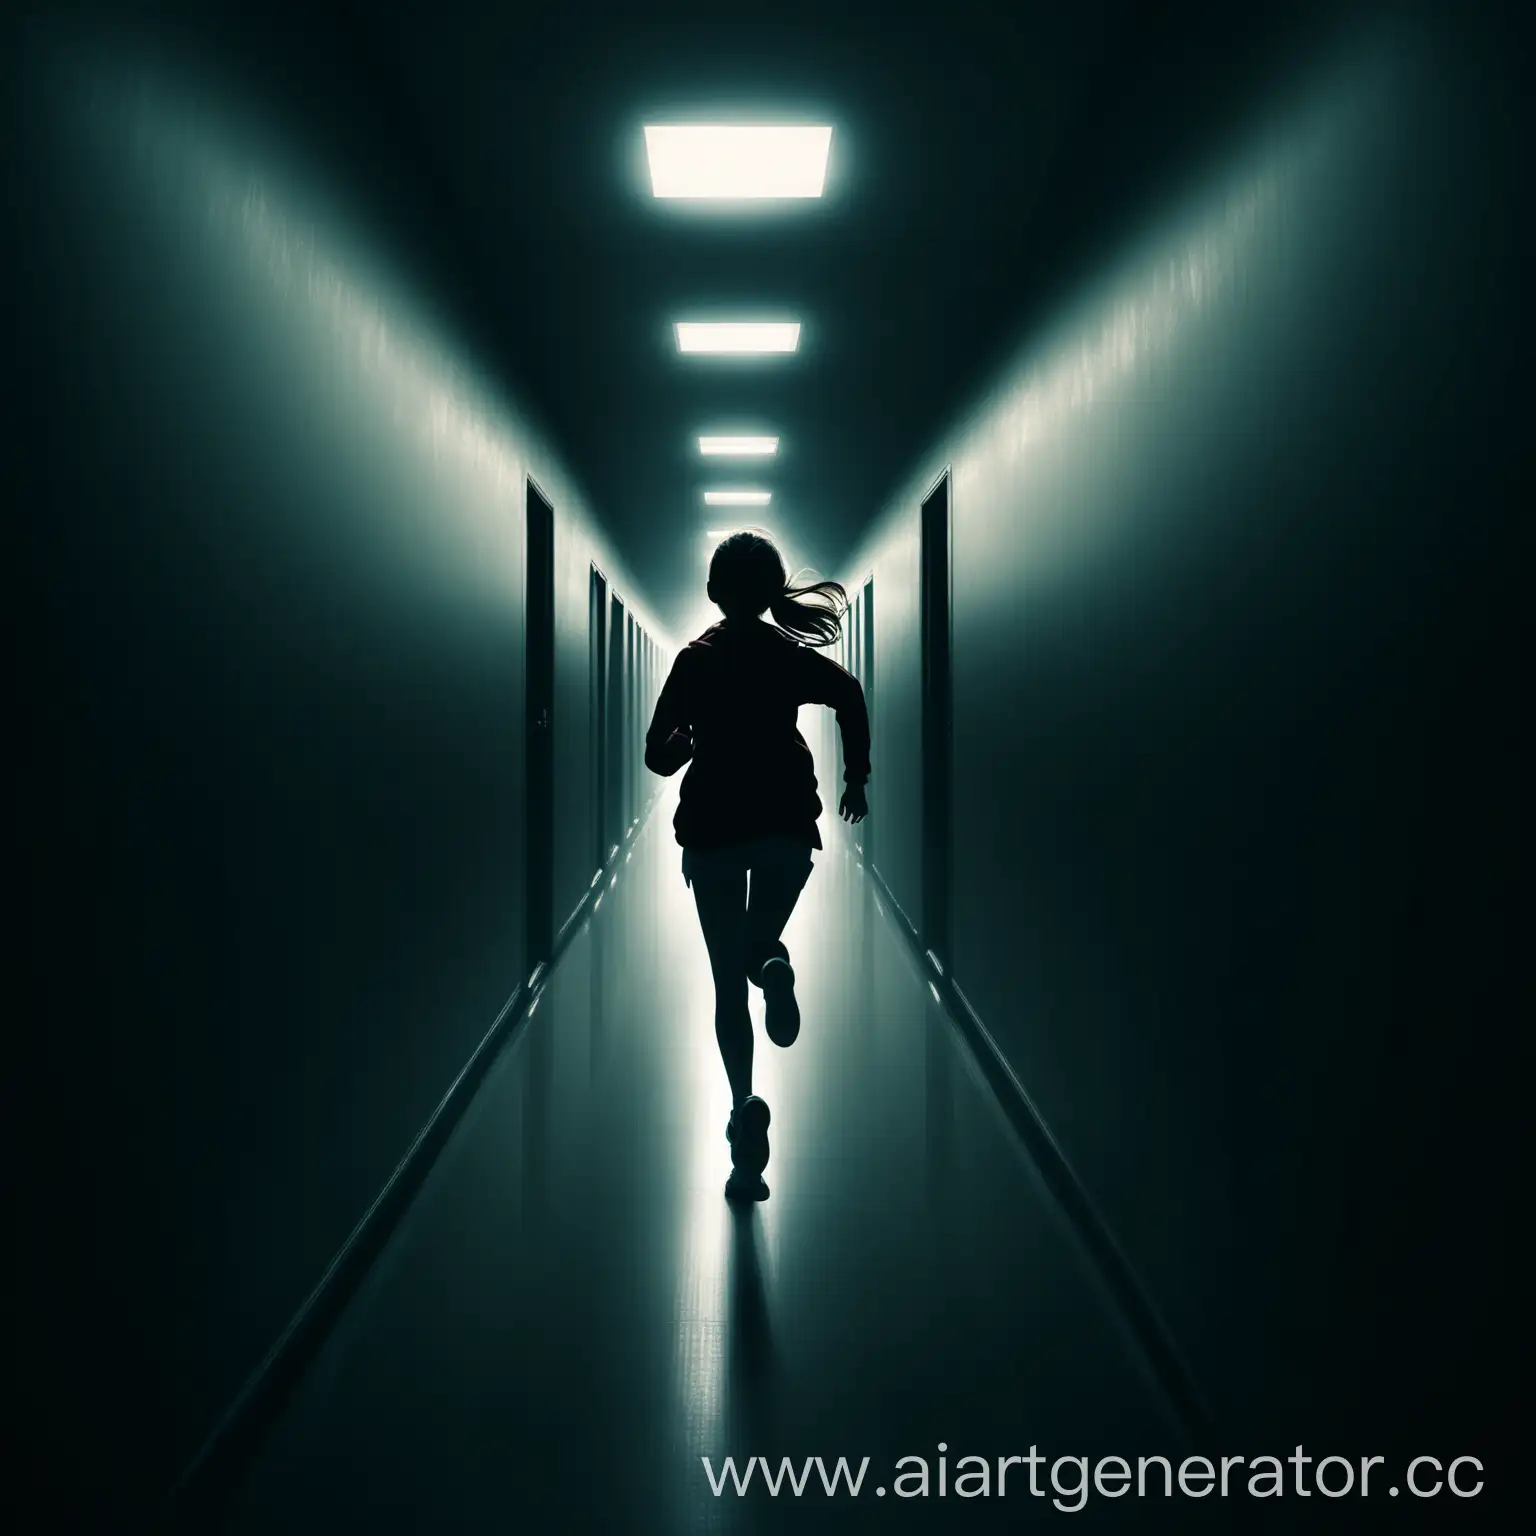 Young-Girl-Running-Through-Shadowy-Corridor